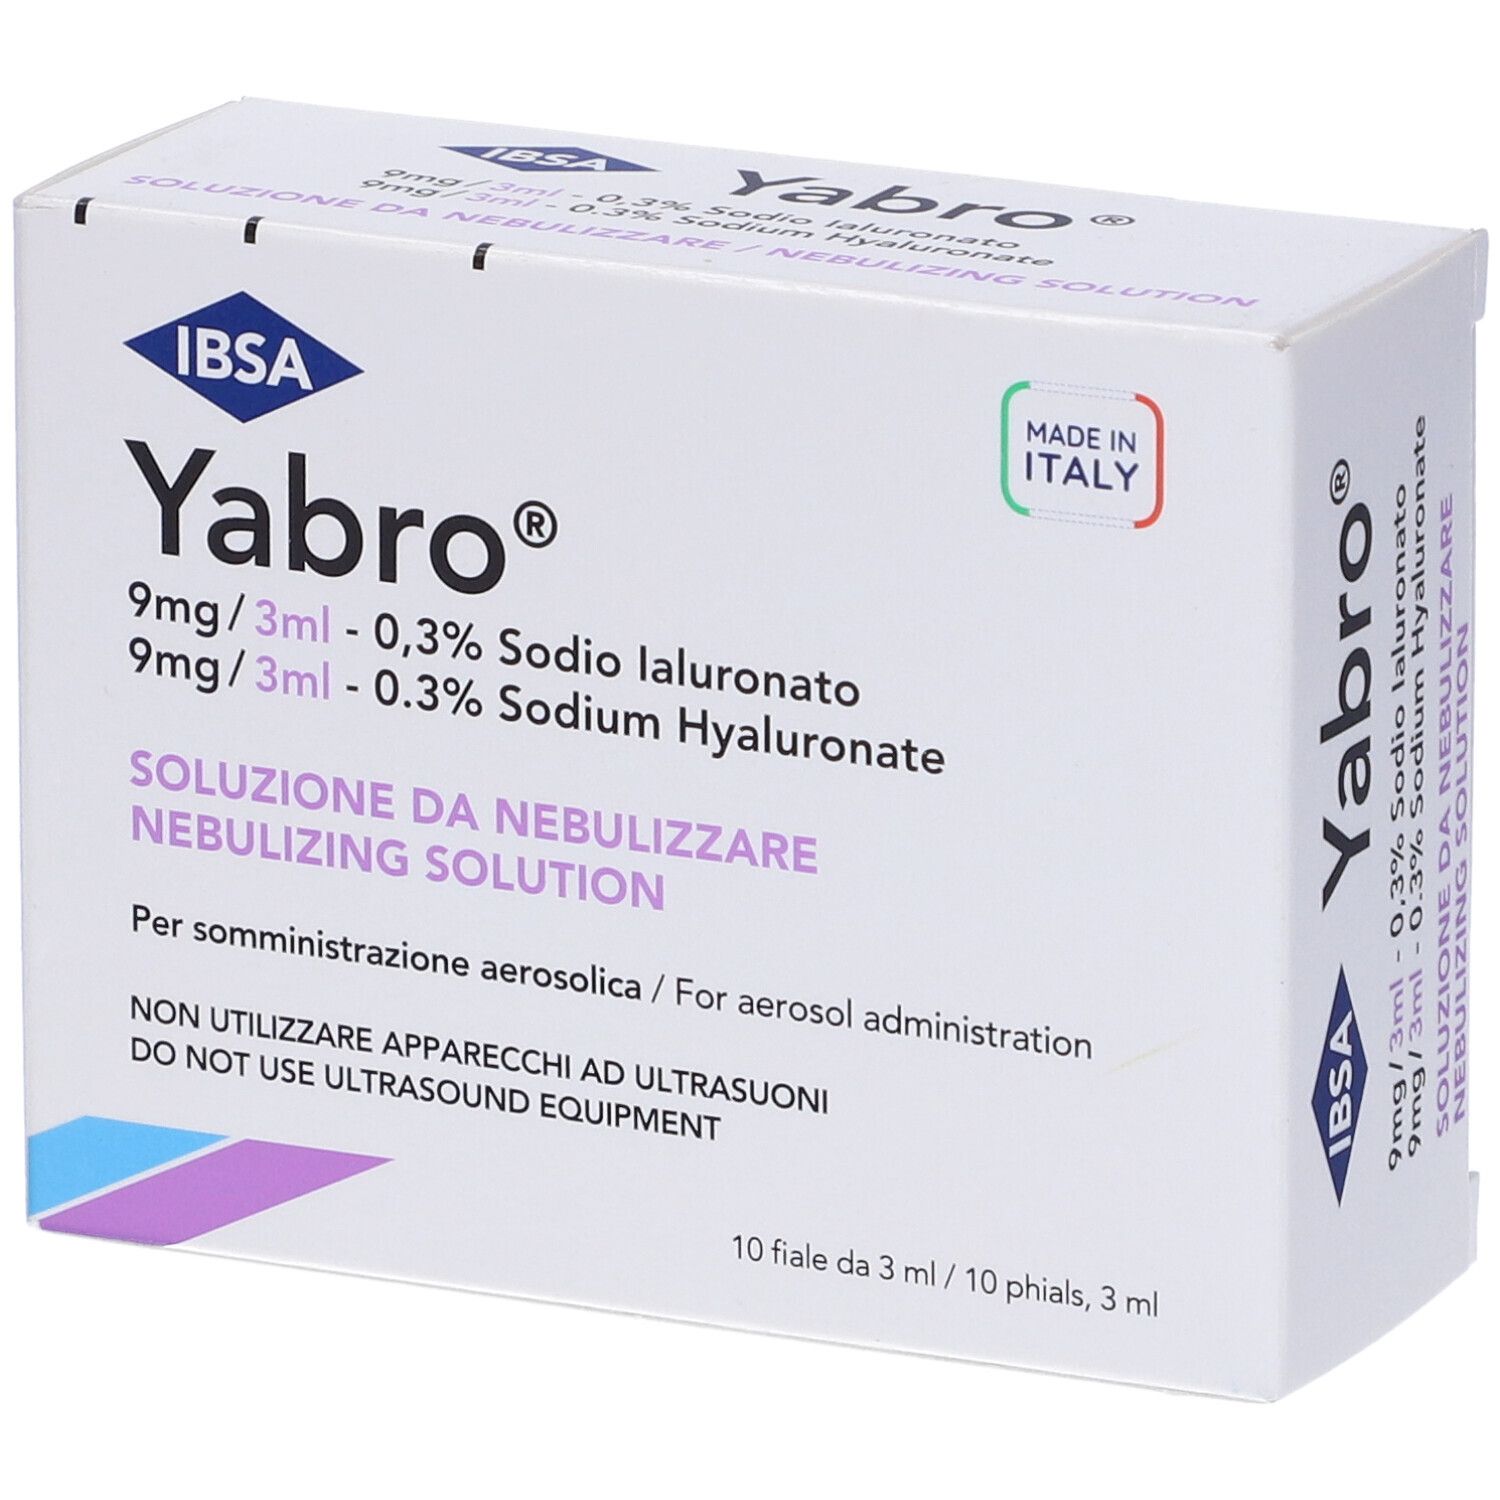 Image of Yabro® Sodio Ialuronato 0,3%